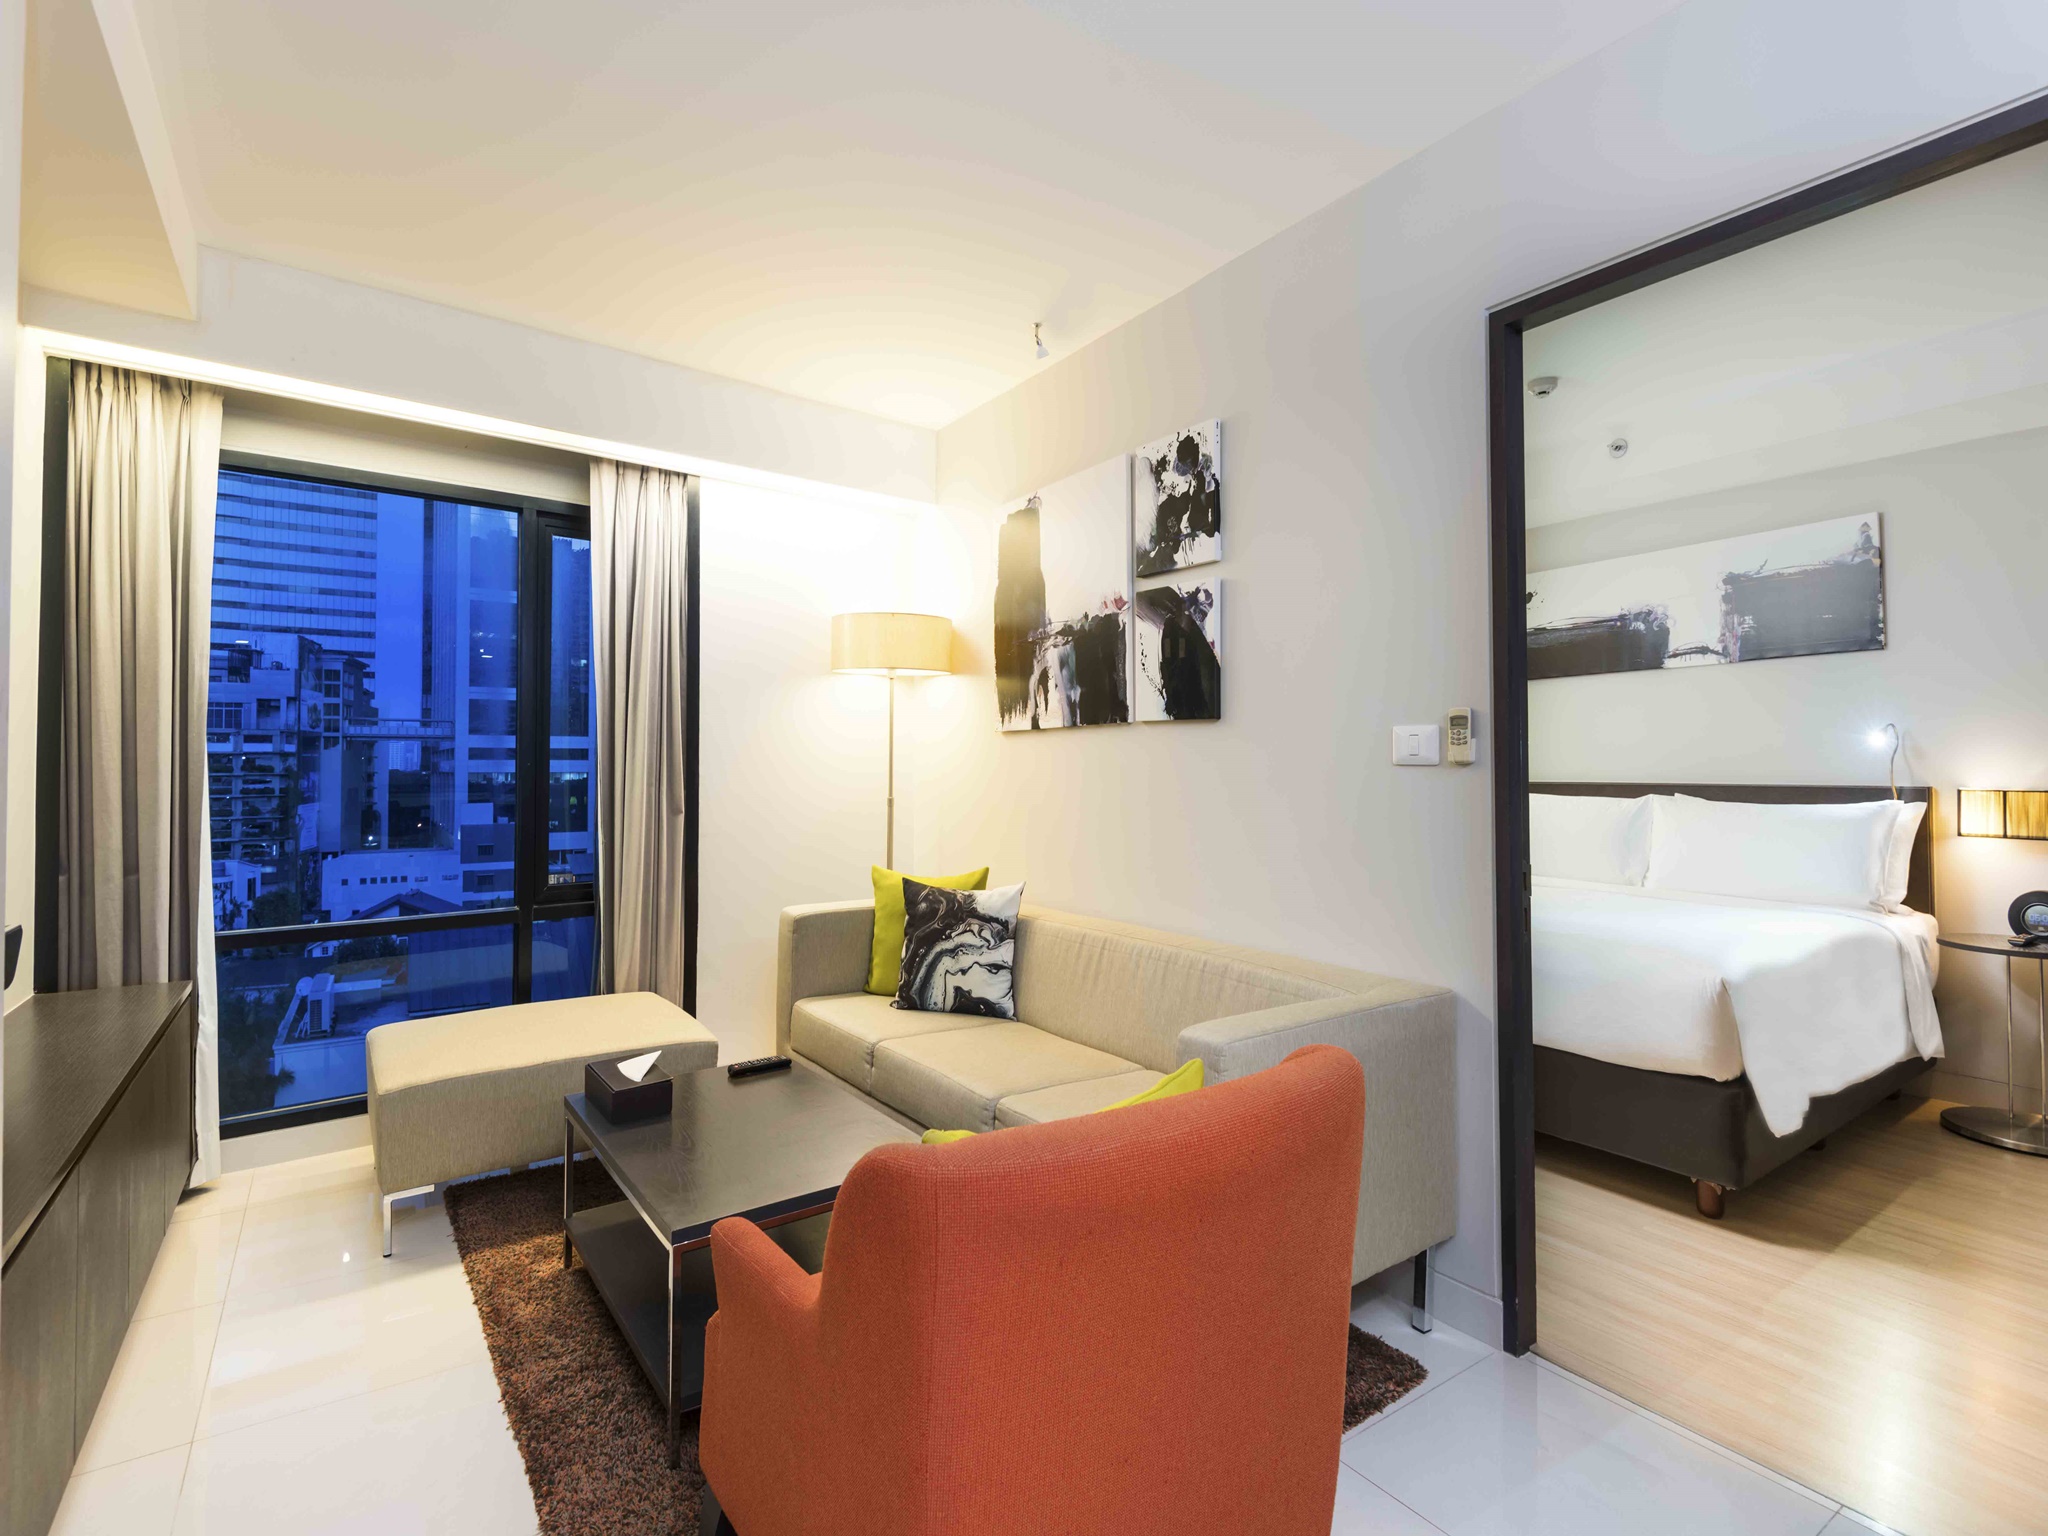 E- Voucher ASQ Package in Two Bedroom Suite at Maitria Hotel Sukhumvit 18 Bangkok โรงแรมมายเทรียณ์ สุขุมวิท 18 กรุงเทพฯ